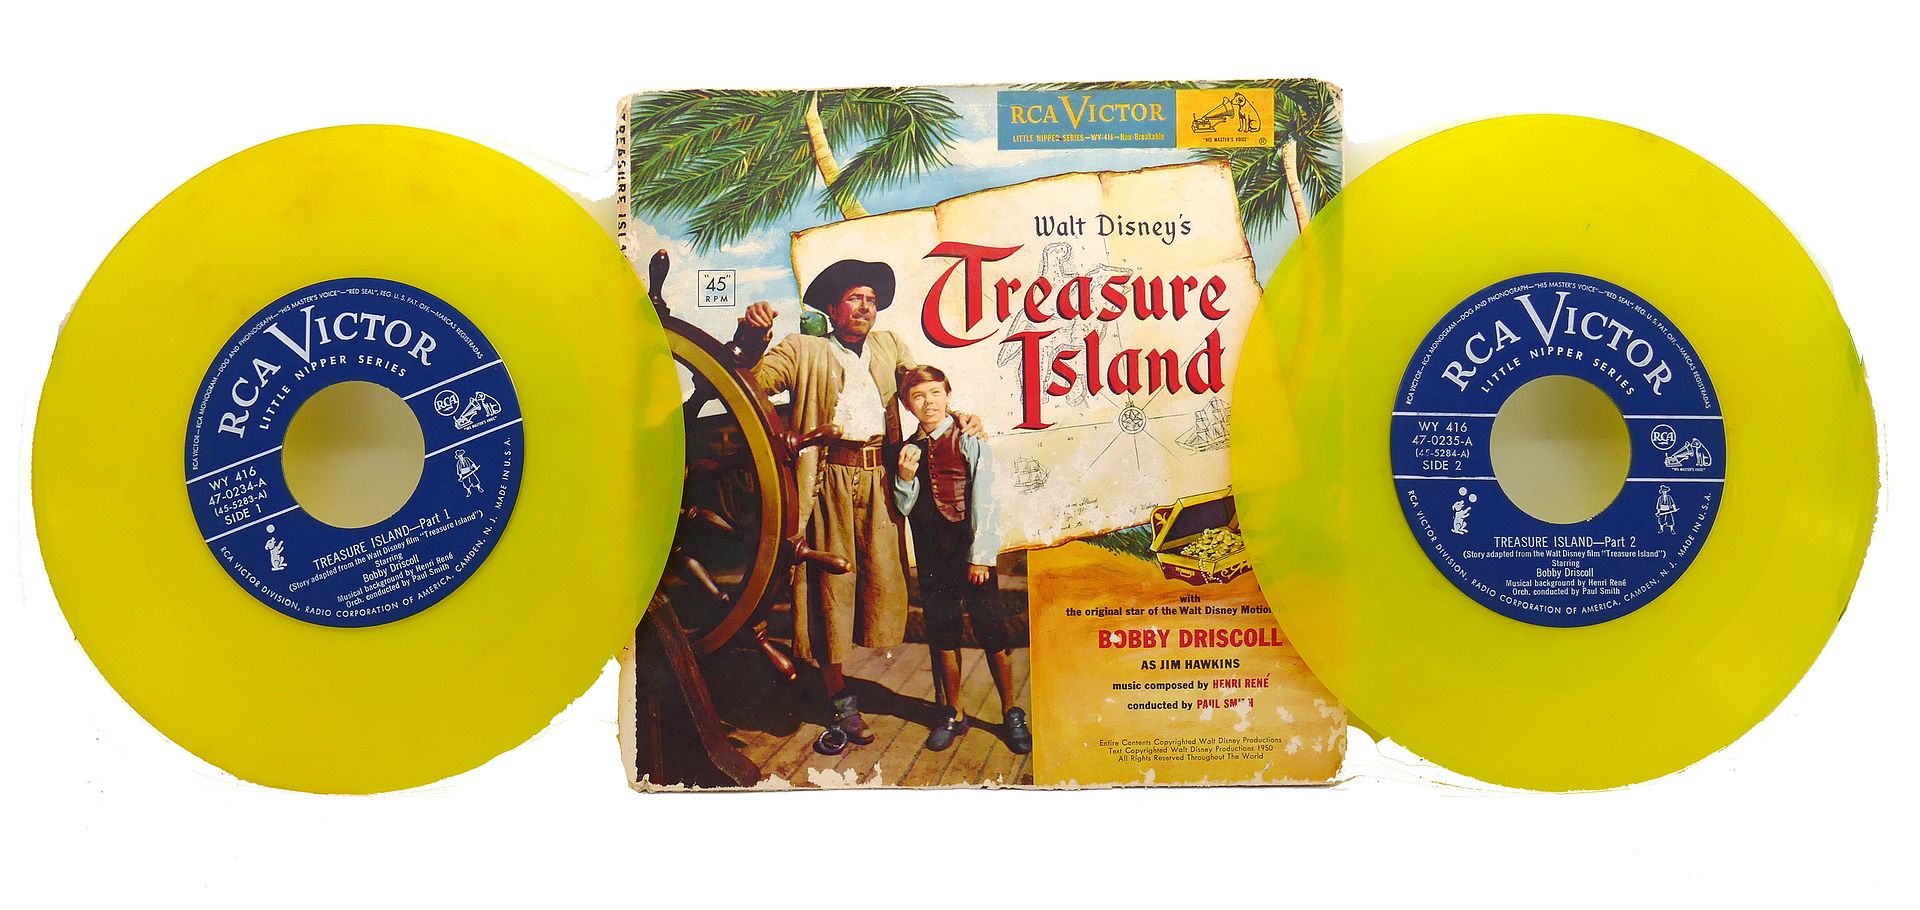 BOBBY DRISCOLL, HENRI RENE, PAUL SMITH - Walt Disney's Treasure Island